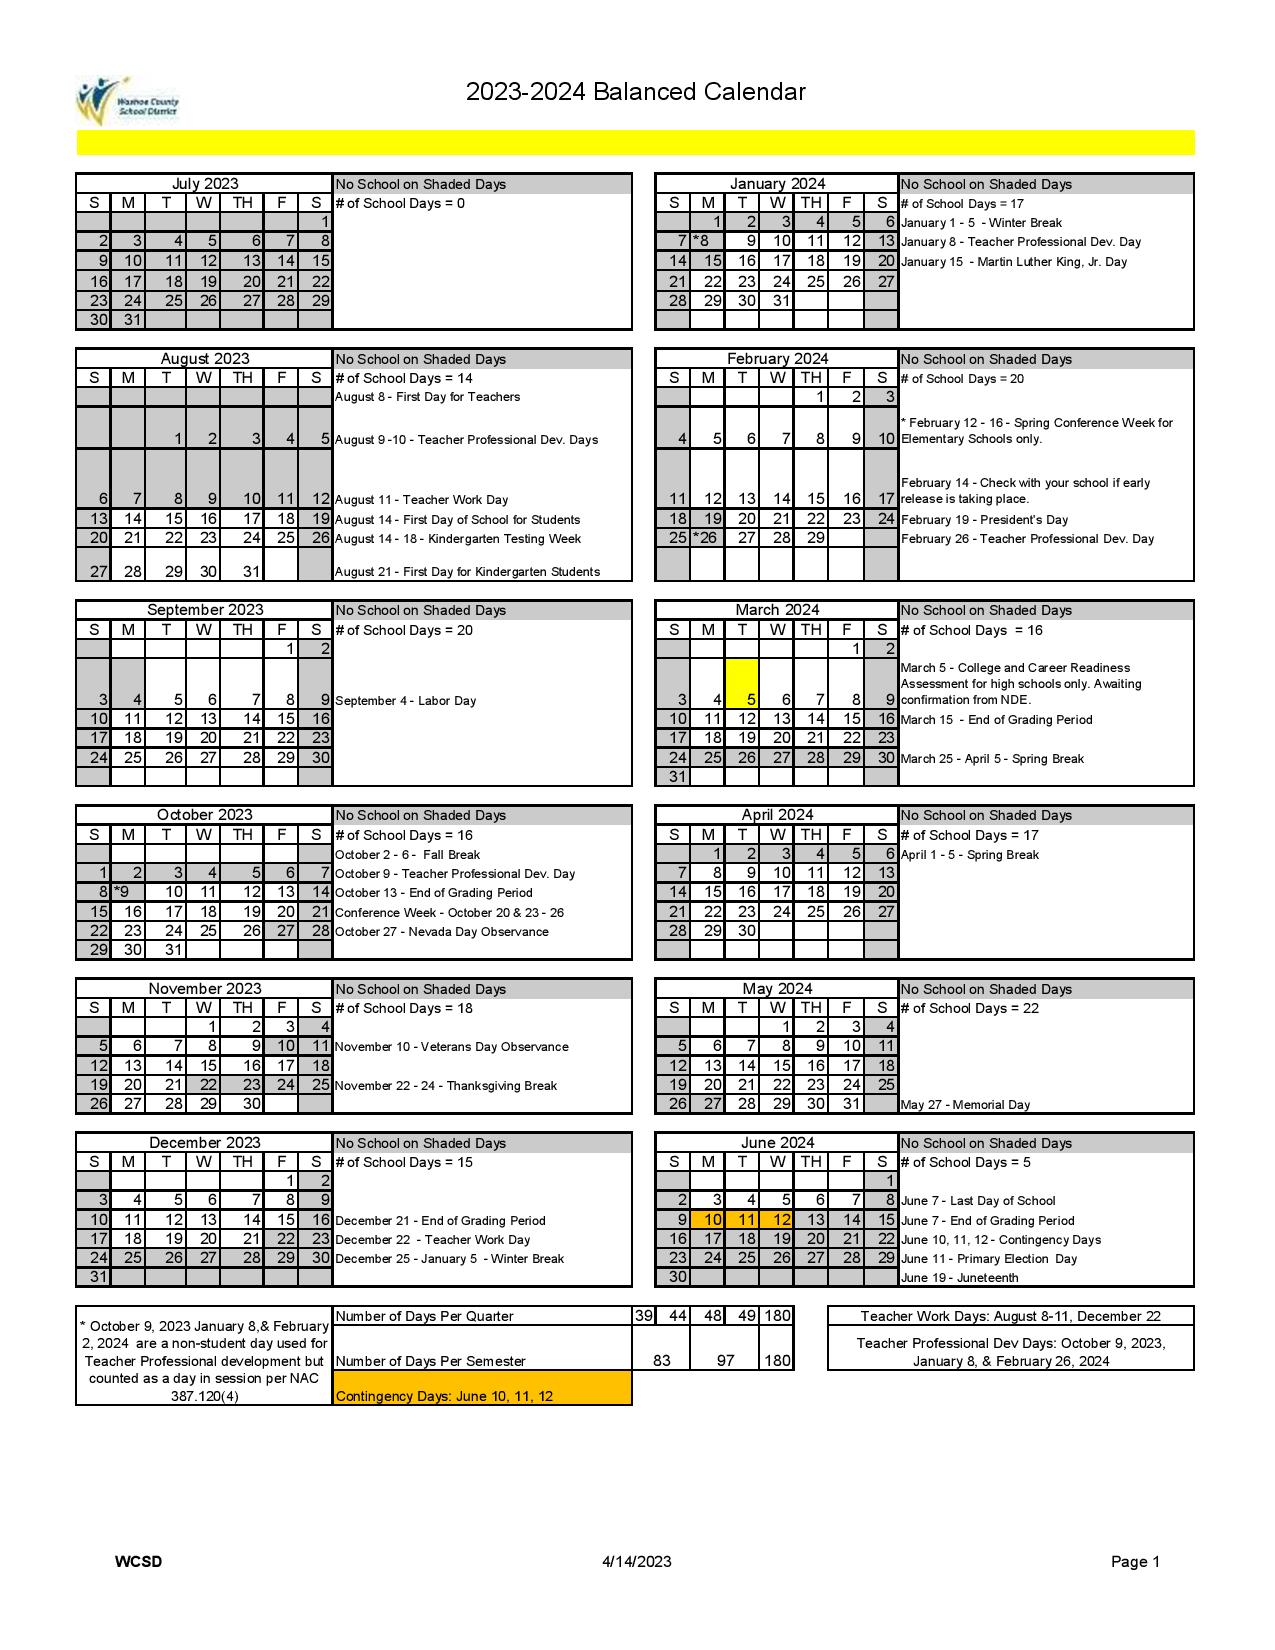 Washoe County School Calendar 2024 2025 janot celestina